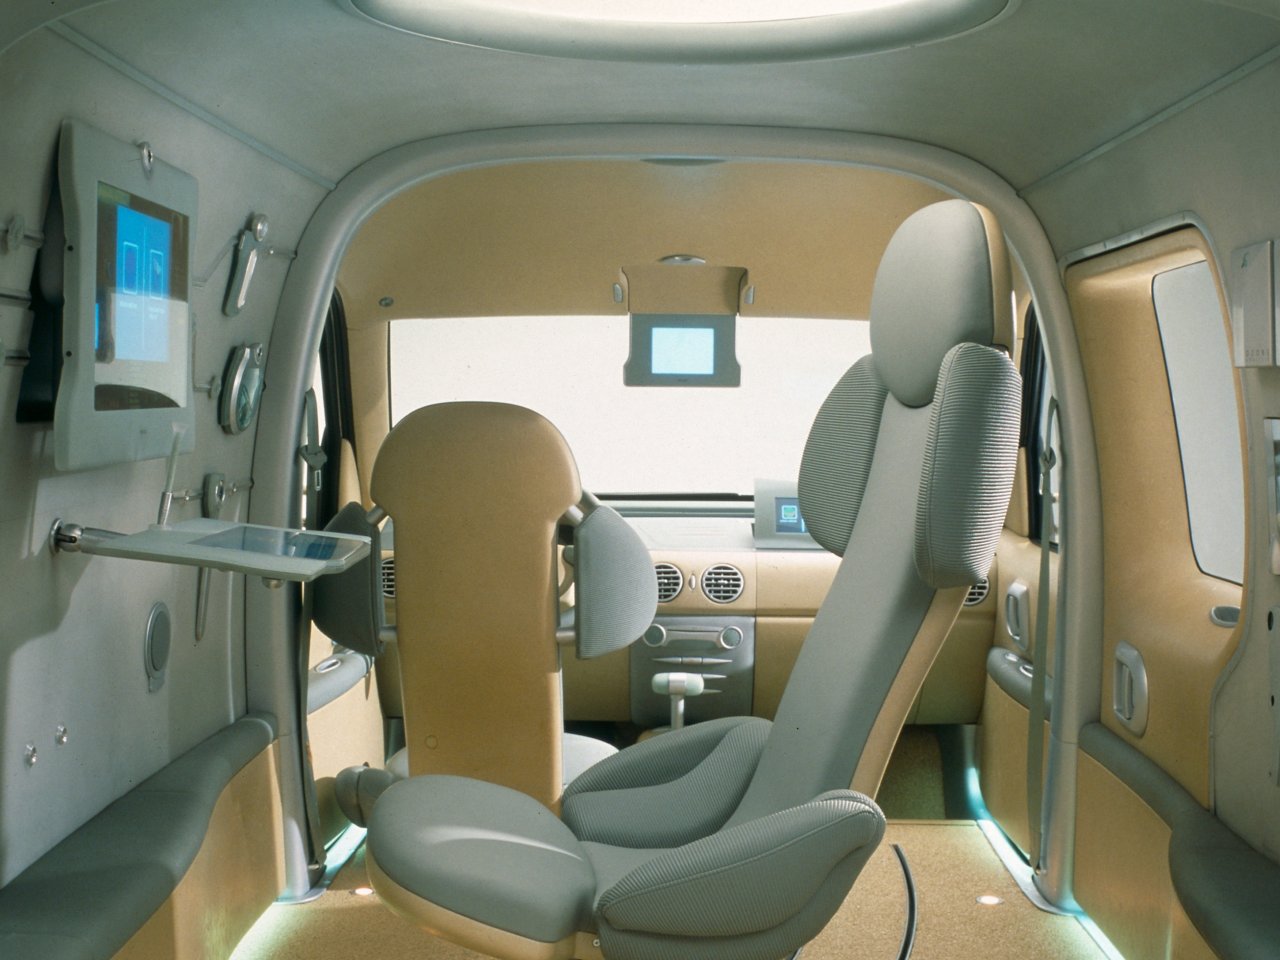 Renault Pangea, 1997 - Interior